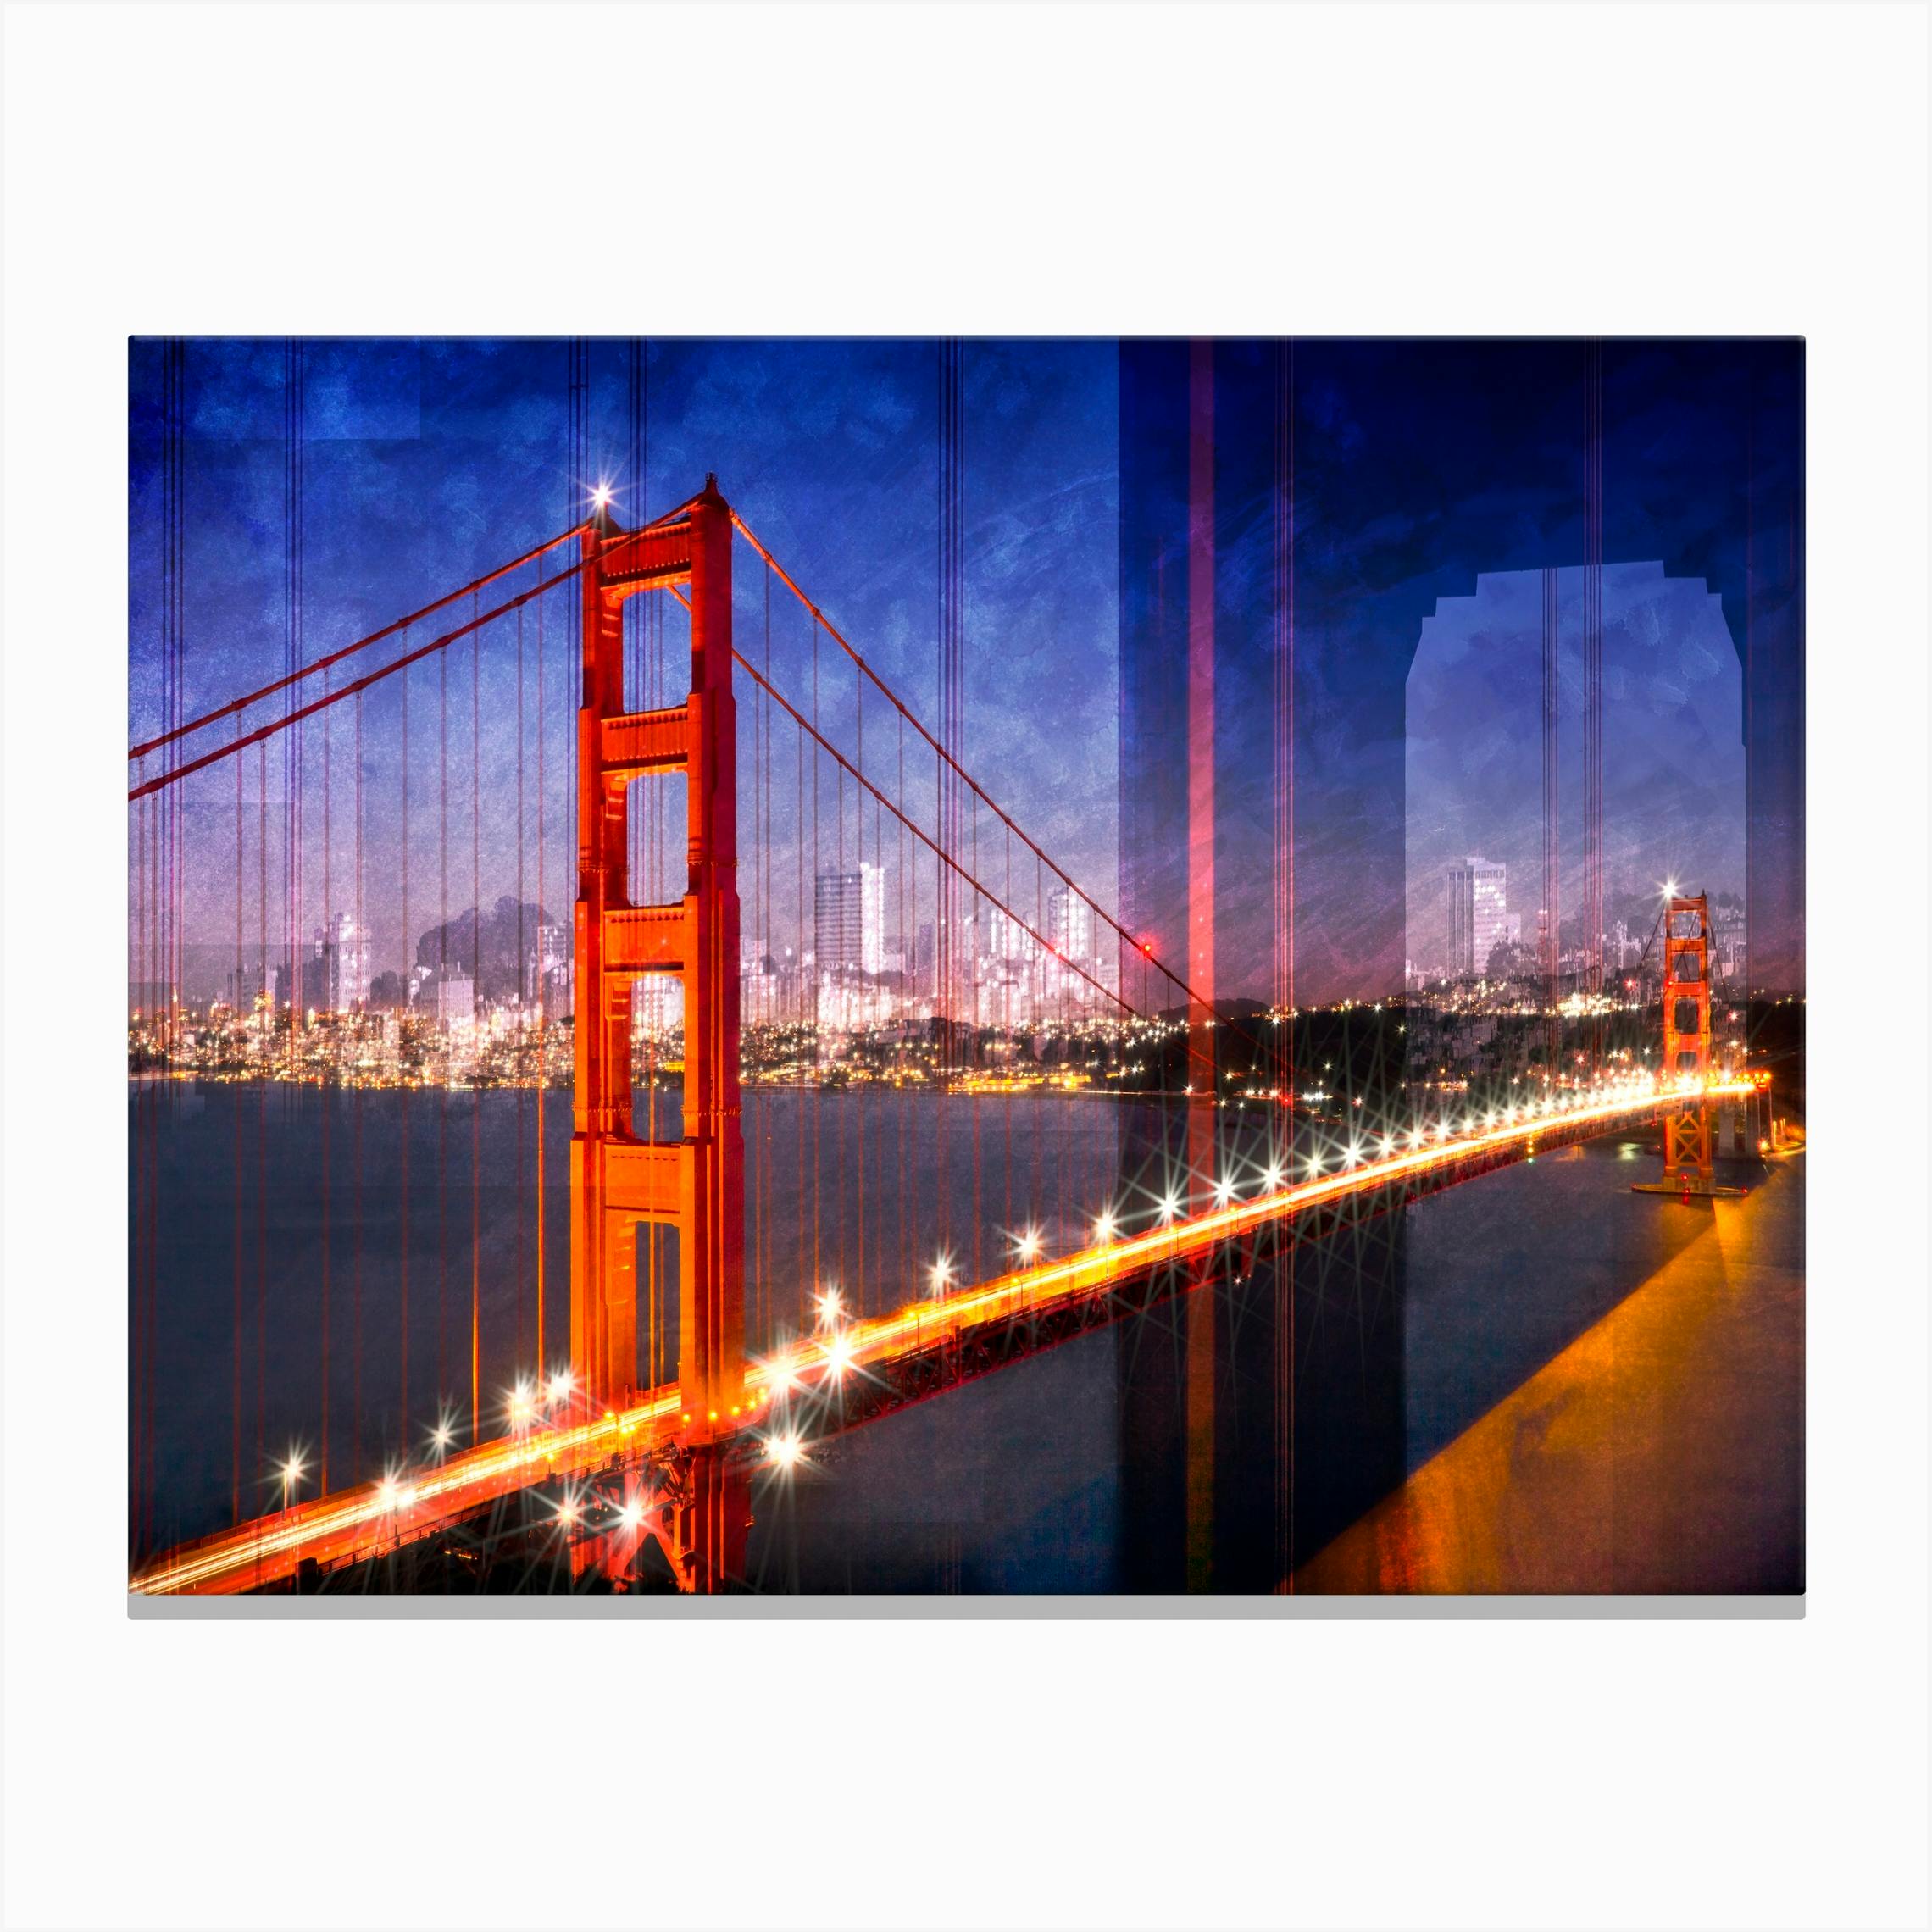 PRINT PHOTO GOLDEN GATE BRIDGE SAN FRANCISCO CANVAS PICTURE PRINTS WALL ART